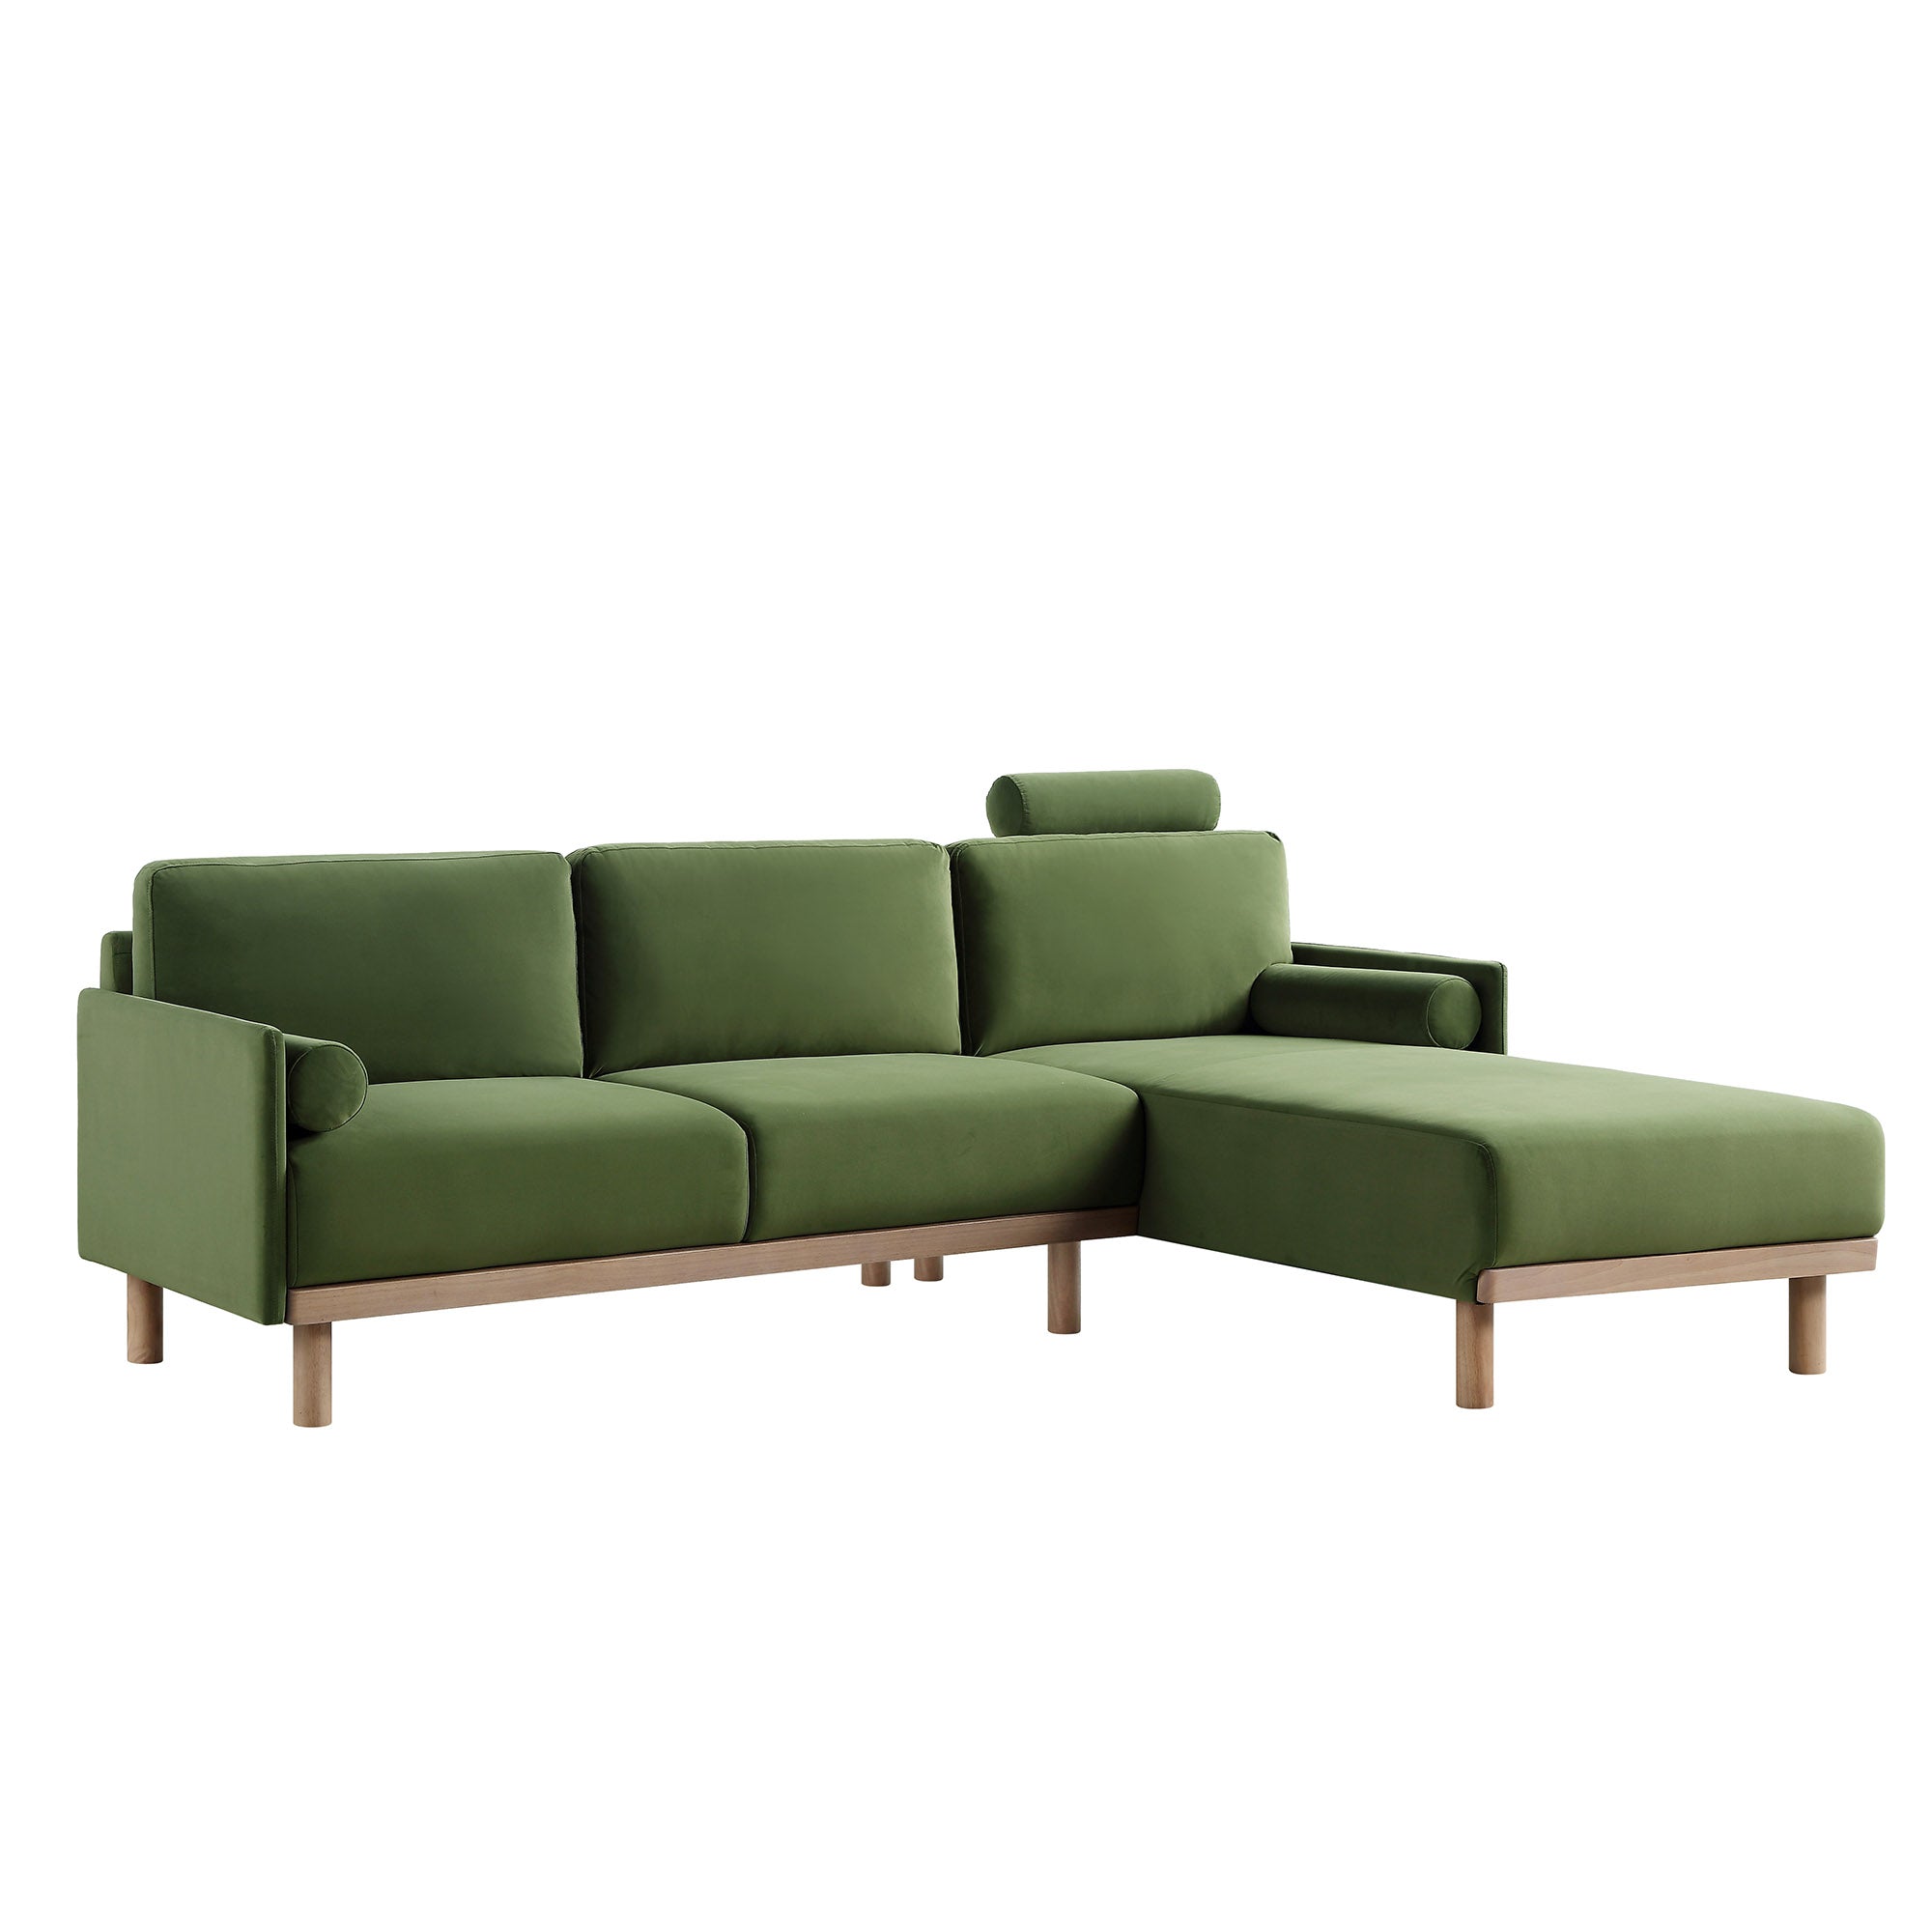 Timber Fern Green Velvet Sofa, Large 3-Seater Chaise Sofa Right Hand